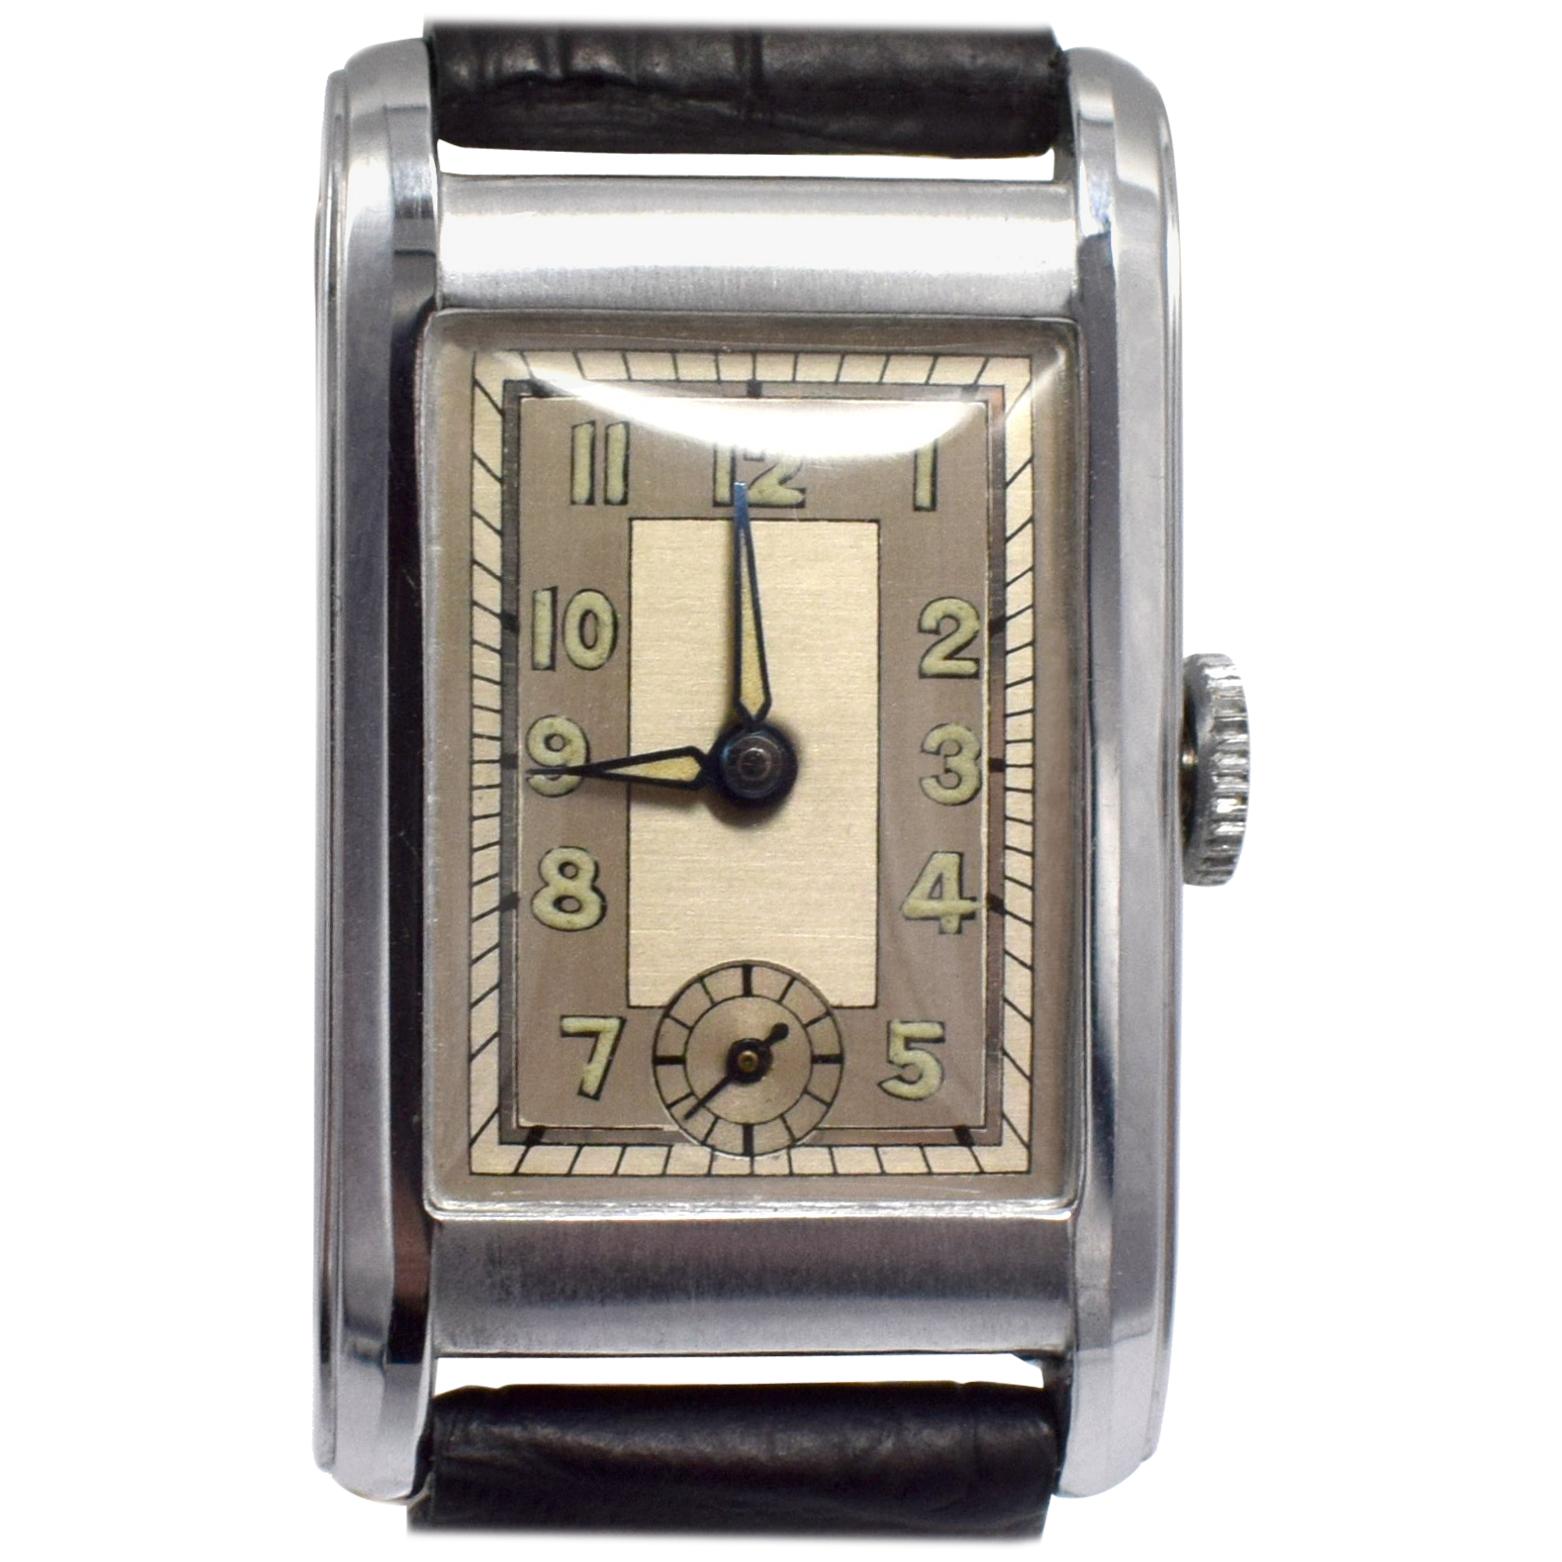 Art Deco Gents Streamline Chrome Wristwatch, Never Used, Newly Serviced, c 1930